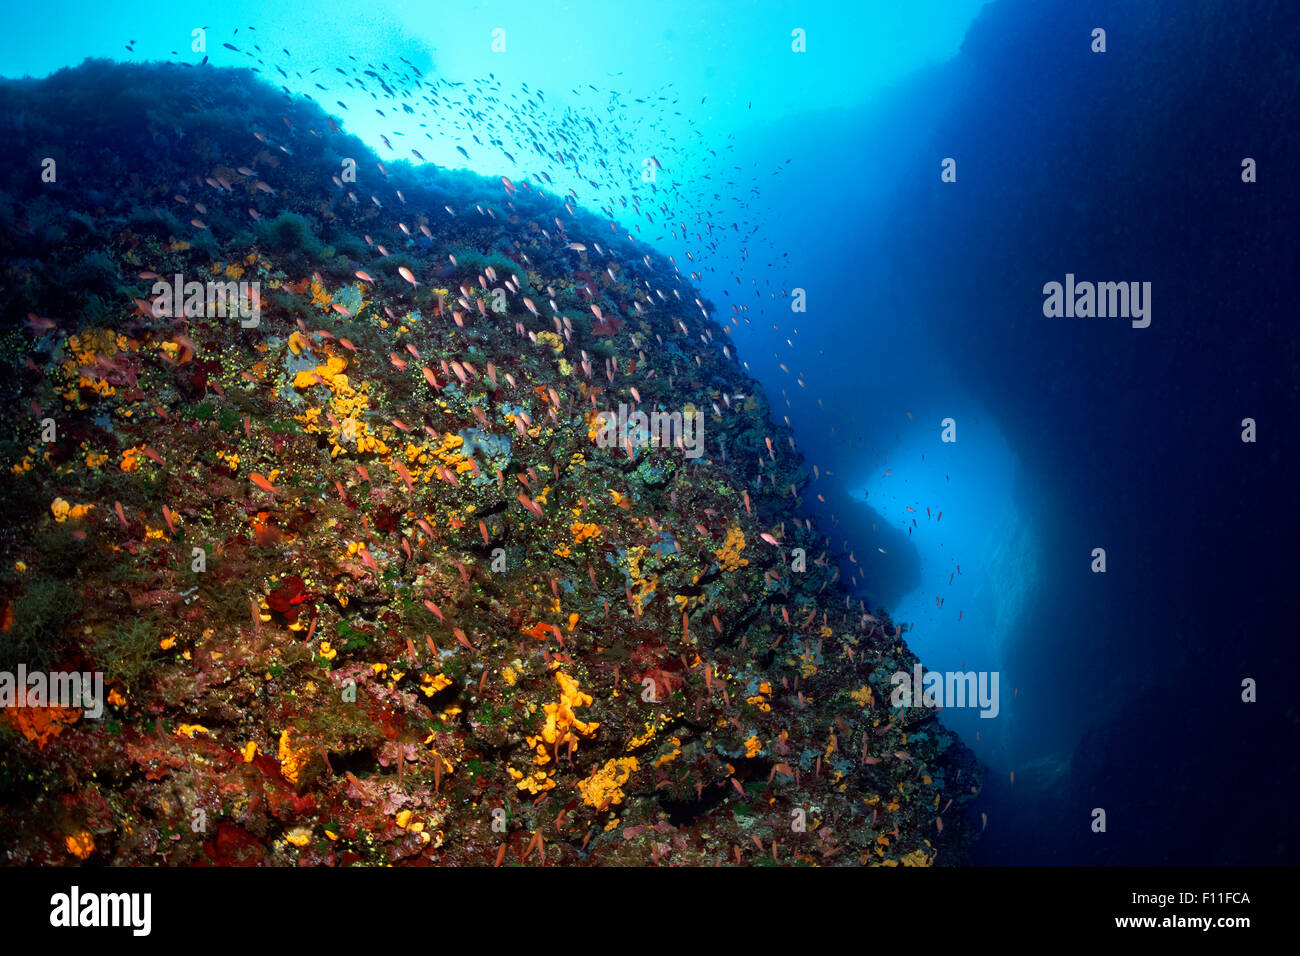 Underwater rocks, overgrown reef with shoal of Swallowtail seaperch (Anthias anthias), multi-colored sponges (Porifera), sunset Stock Photo